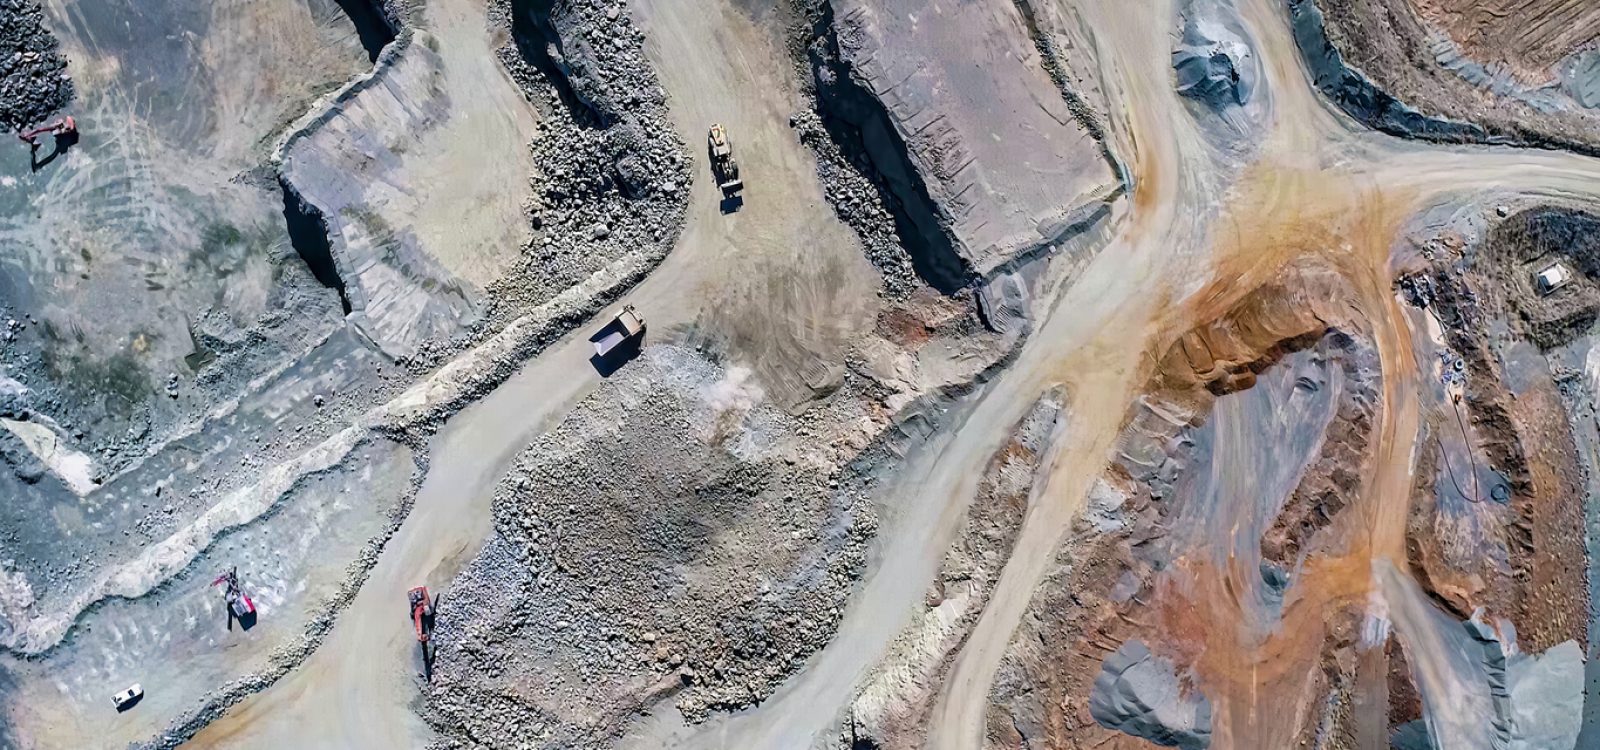 Galilee Basin coal mine in Queensland rejected using expert actuarial evidence